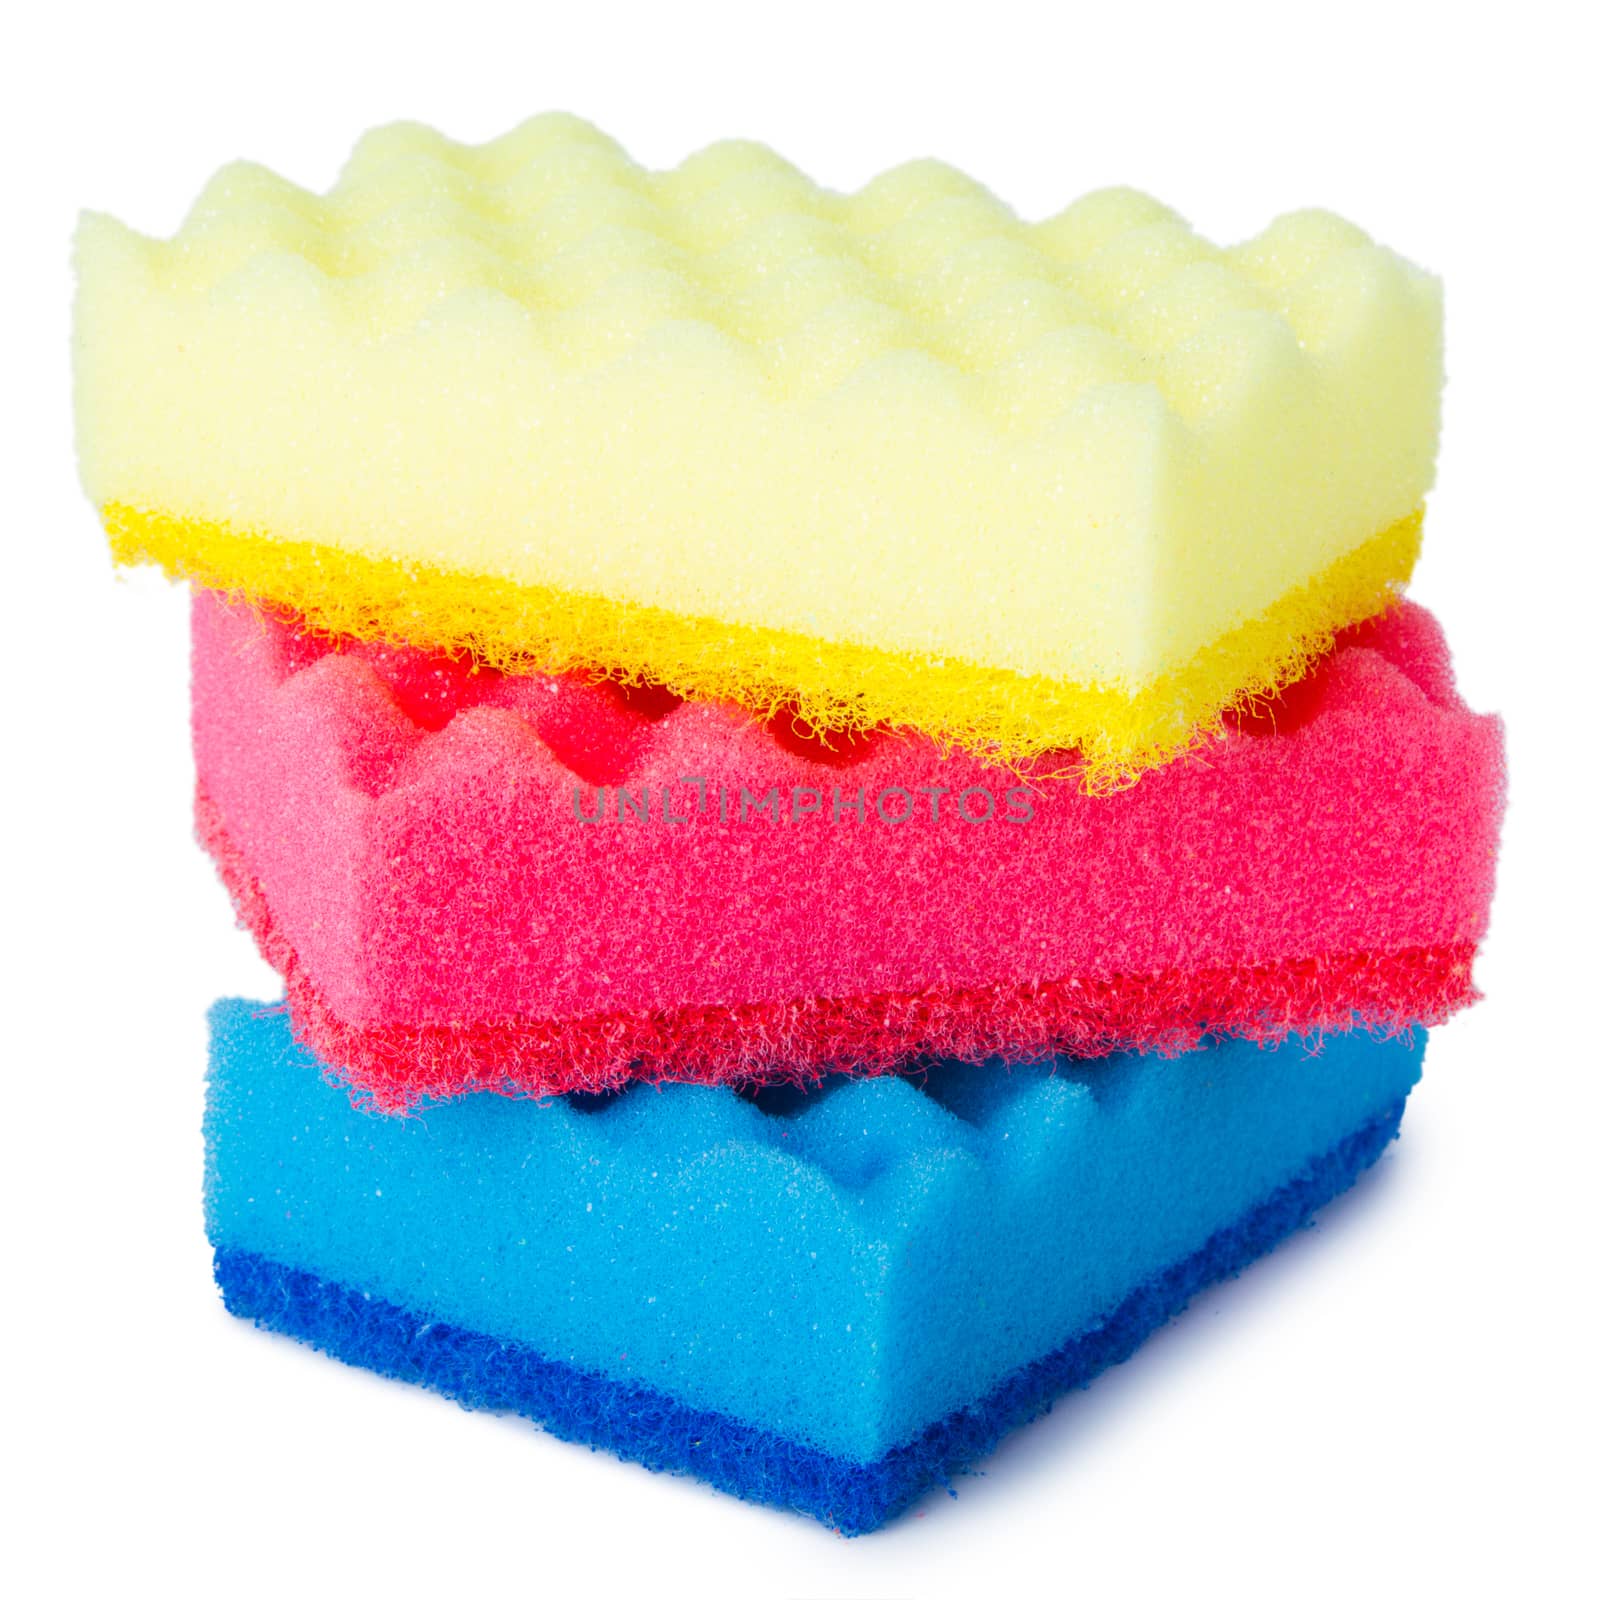 Colorful sponges by grigorenko